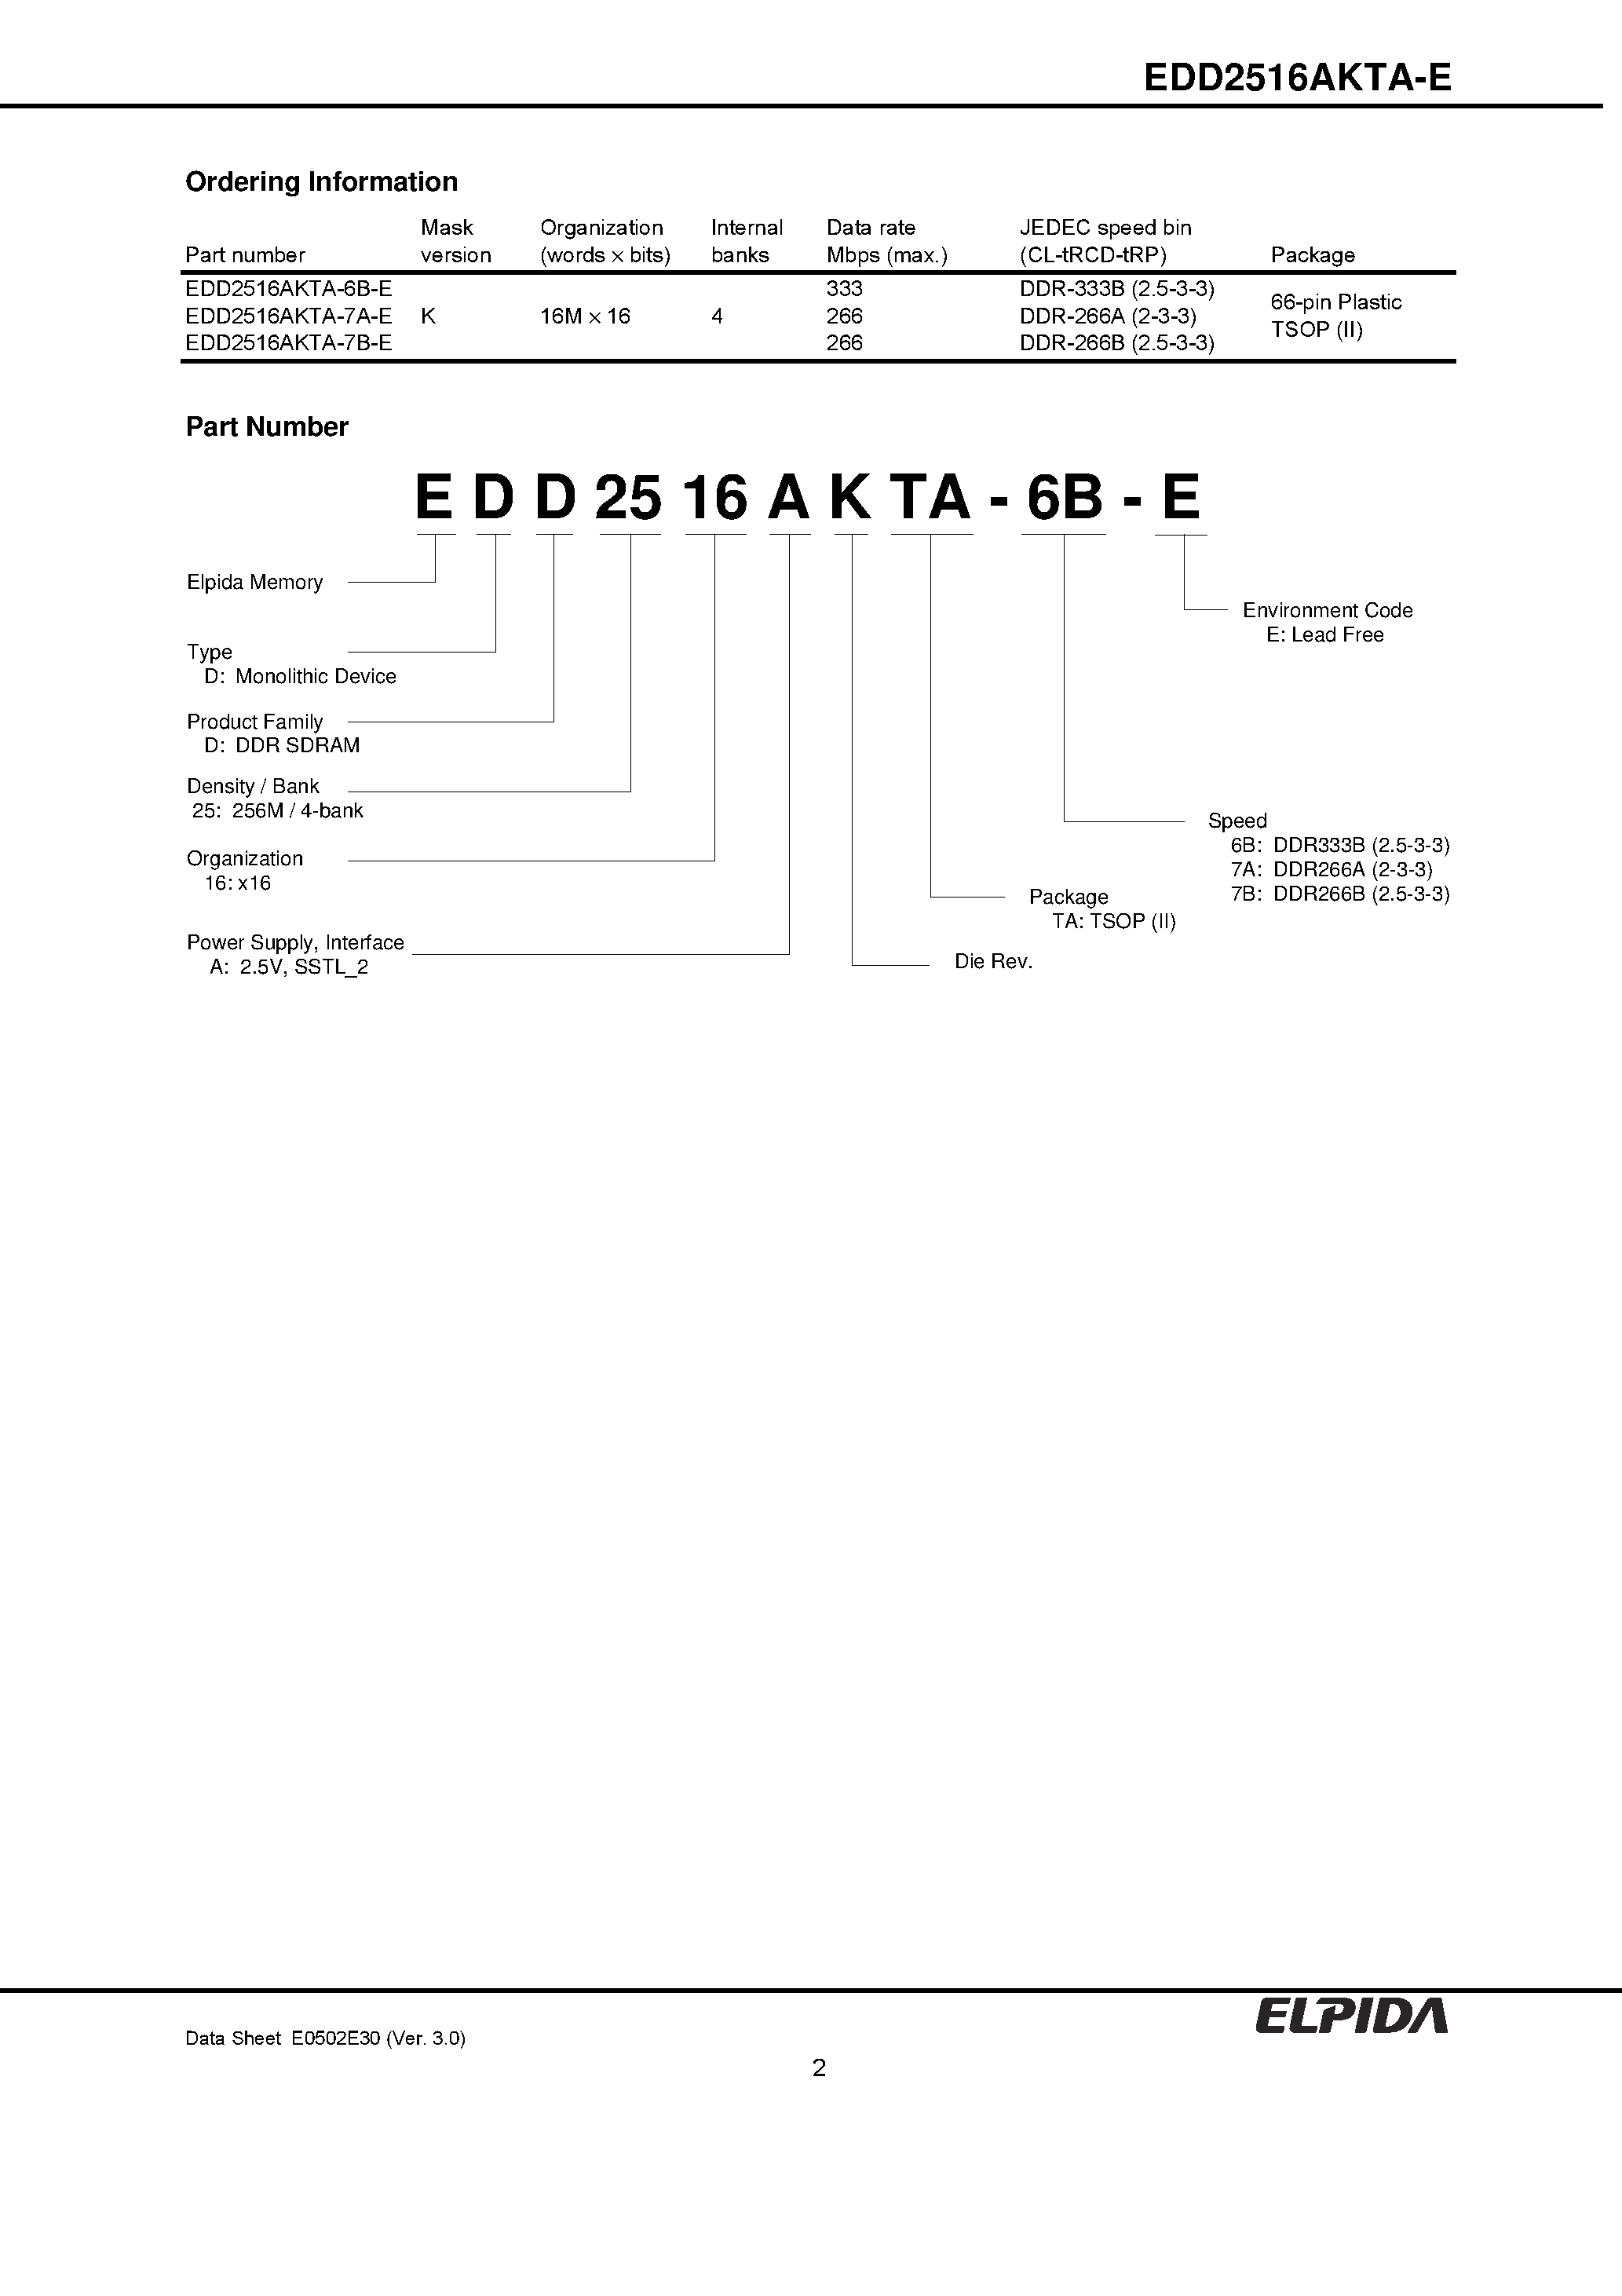 Datasheet EDD2516AKTA-E - 256M bits DDR SDRAM (16M words x16 bits DDR400) page 2